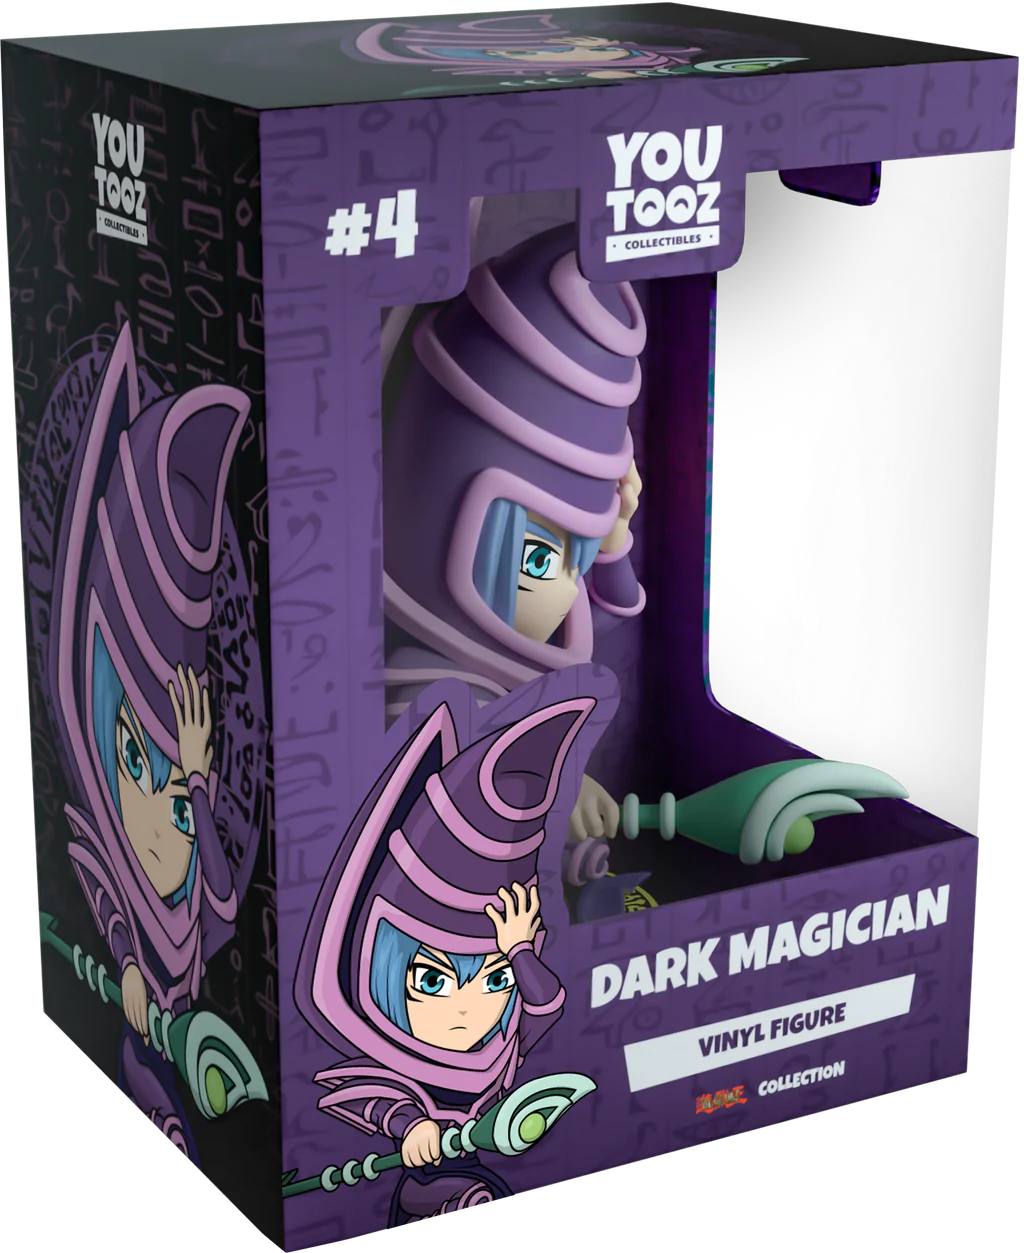 Yu-Gi-Oh! Dark Magician Youtooz Vinyl Figure